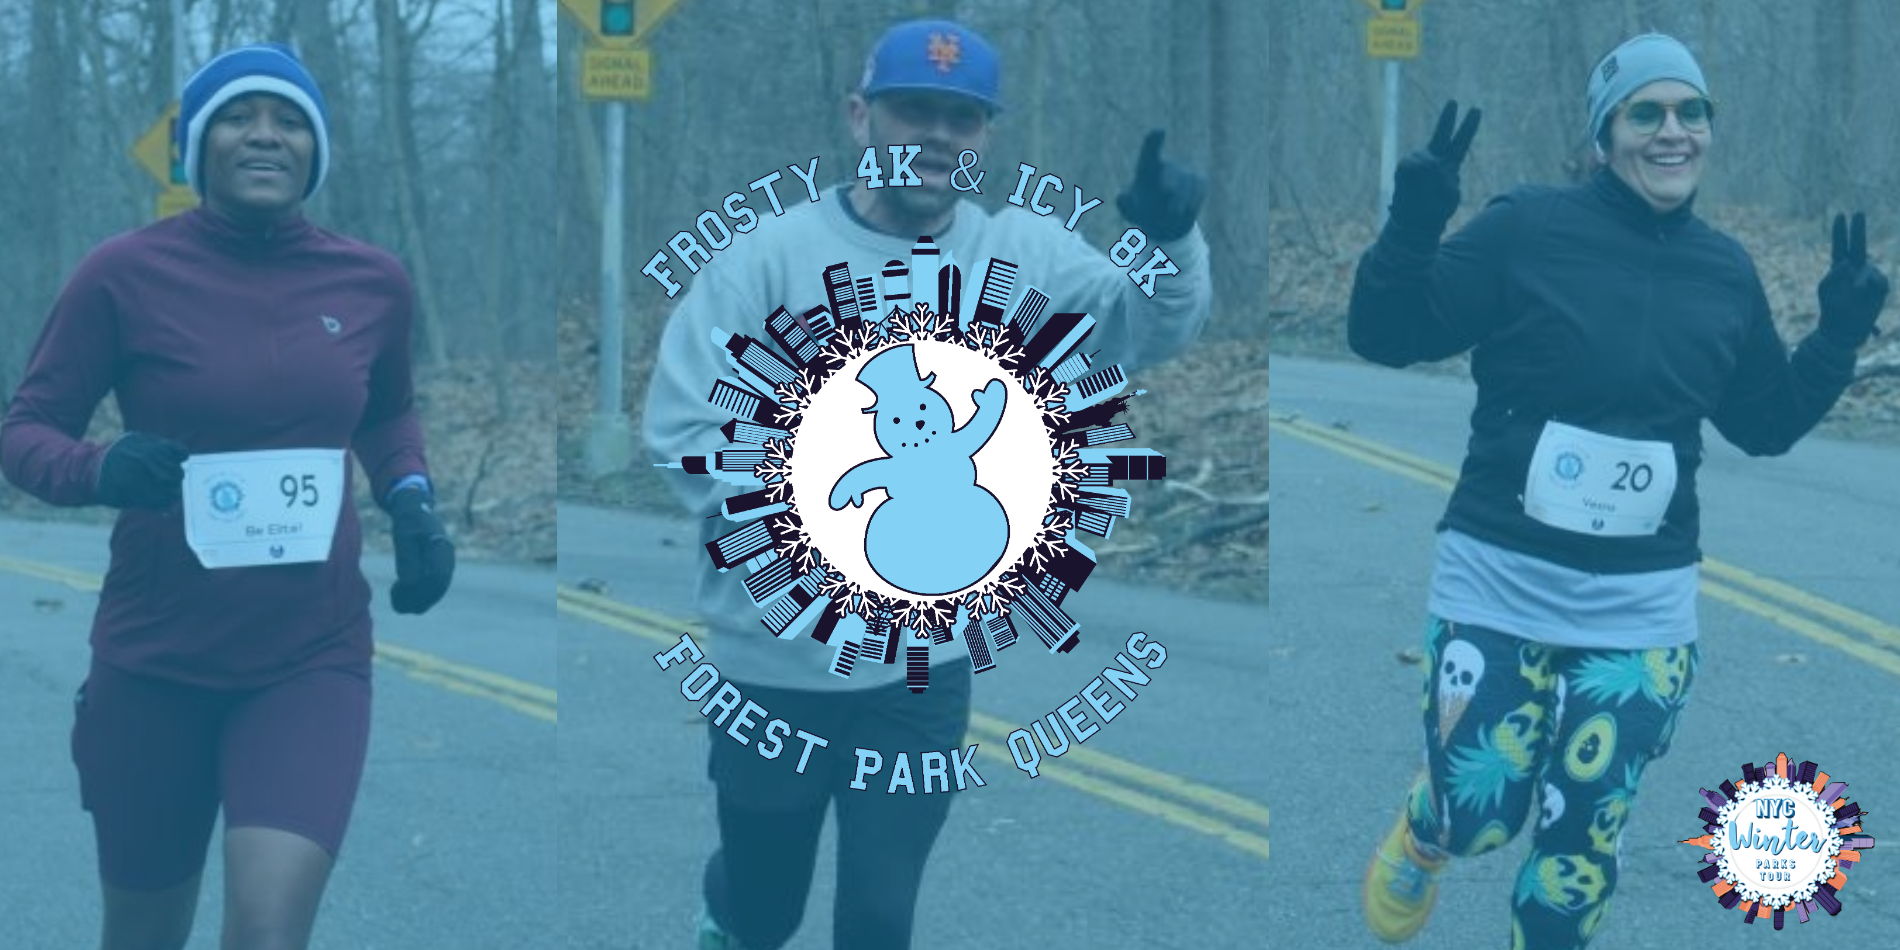 Frosty 4K & Icy 8K promotional image